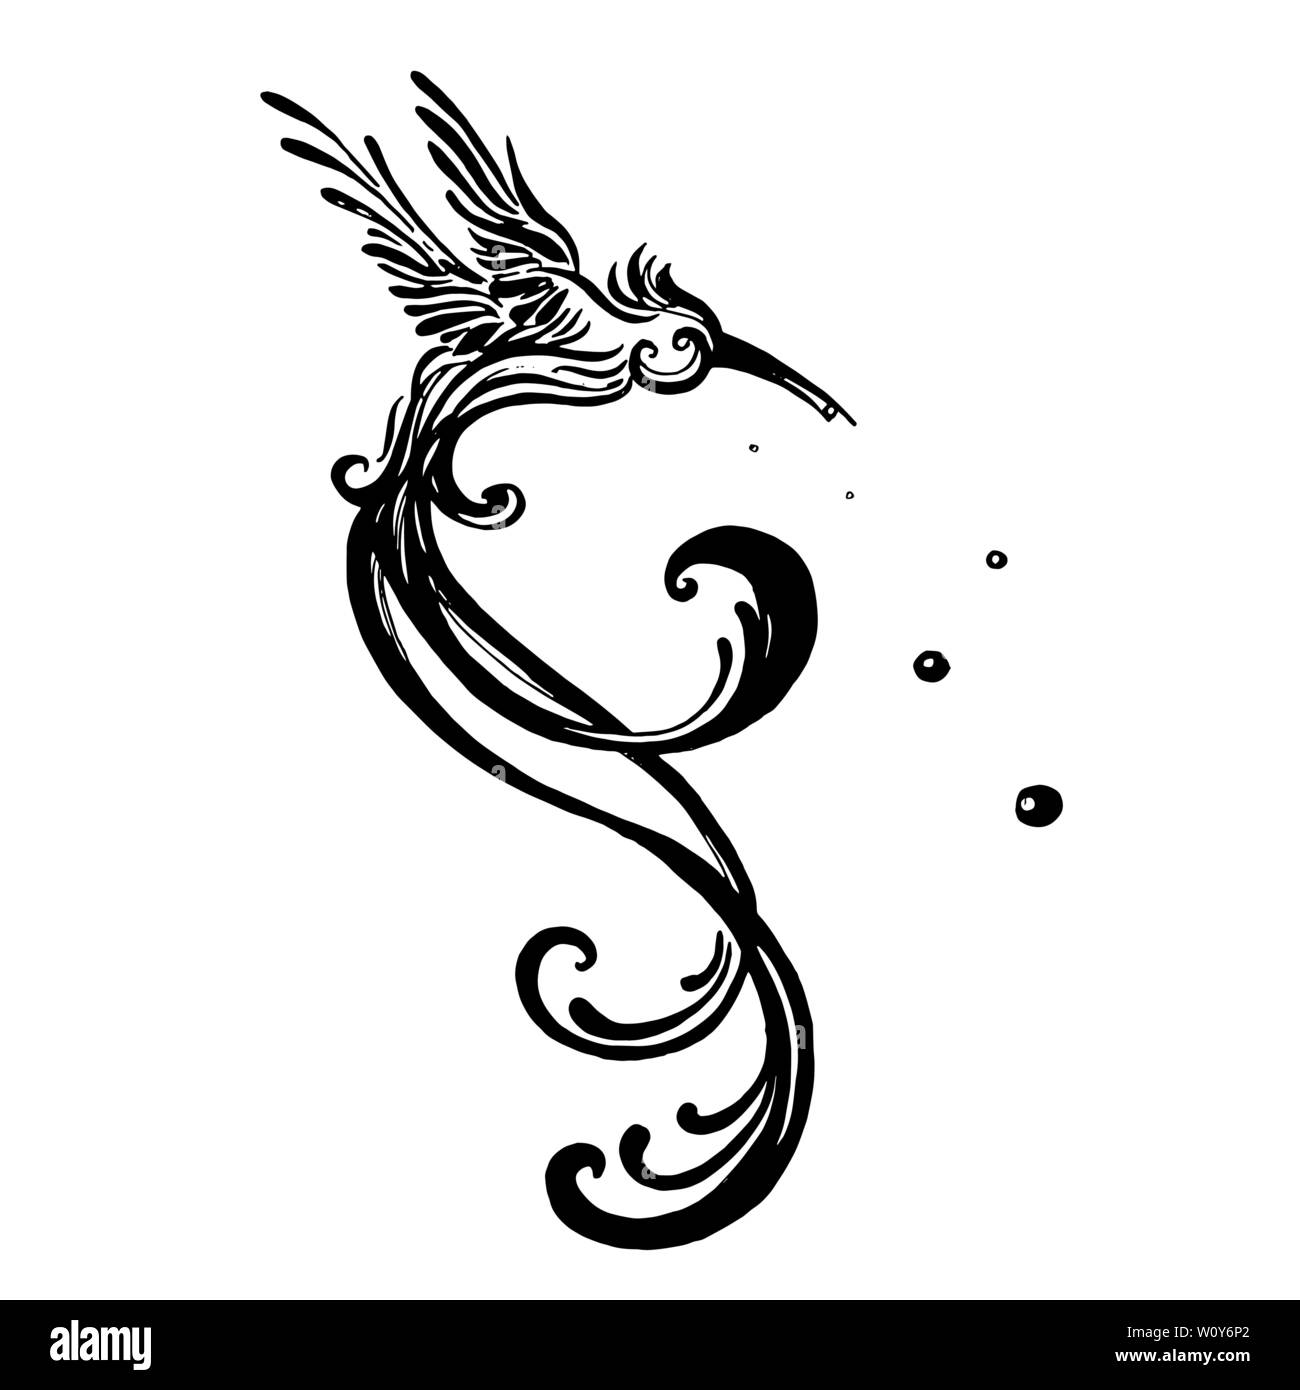 Hummingbird tattoo Black and White Stock Photos & Images - Alamy